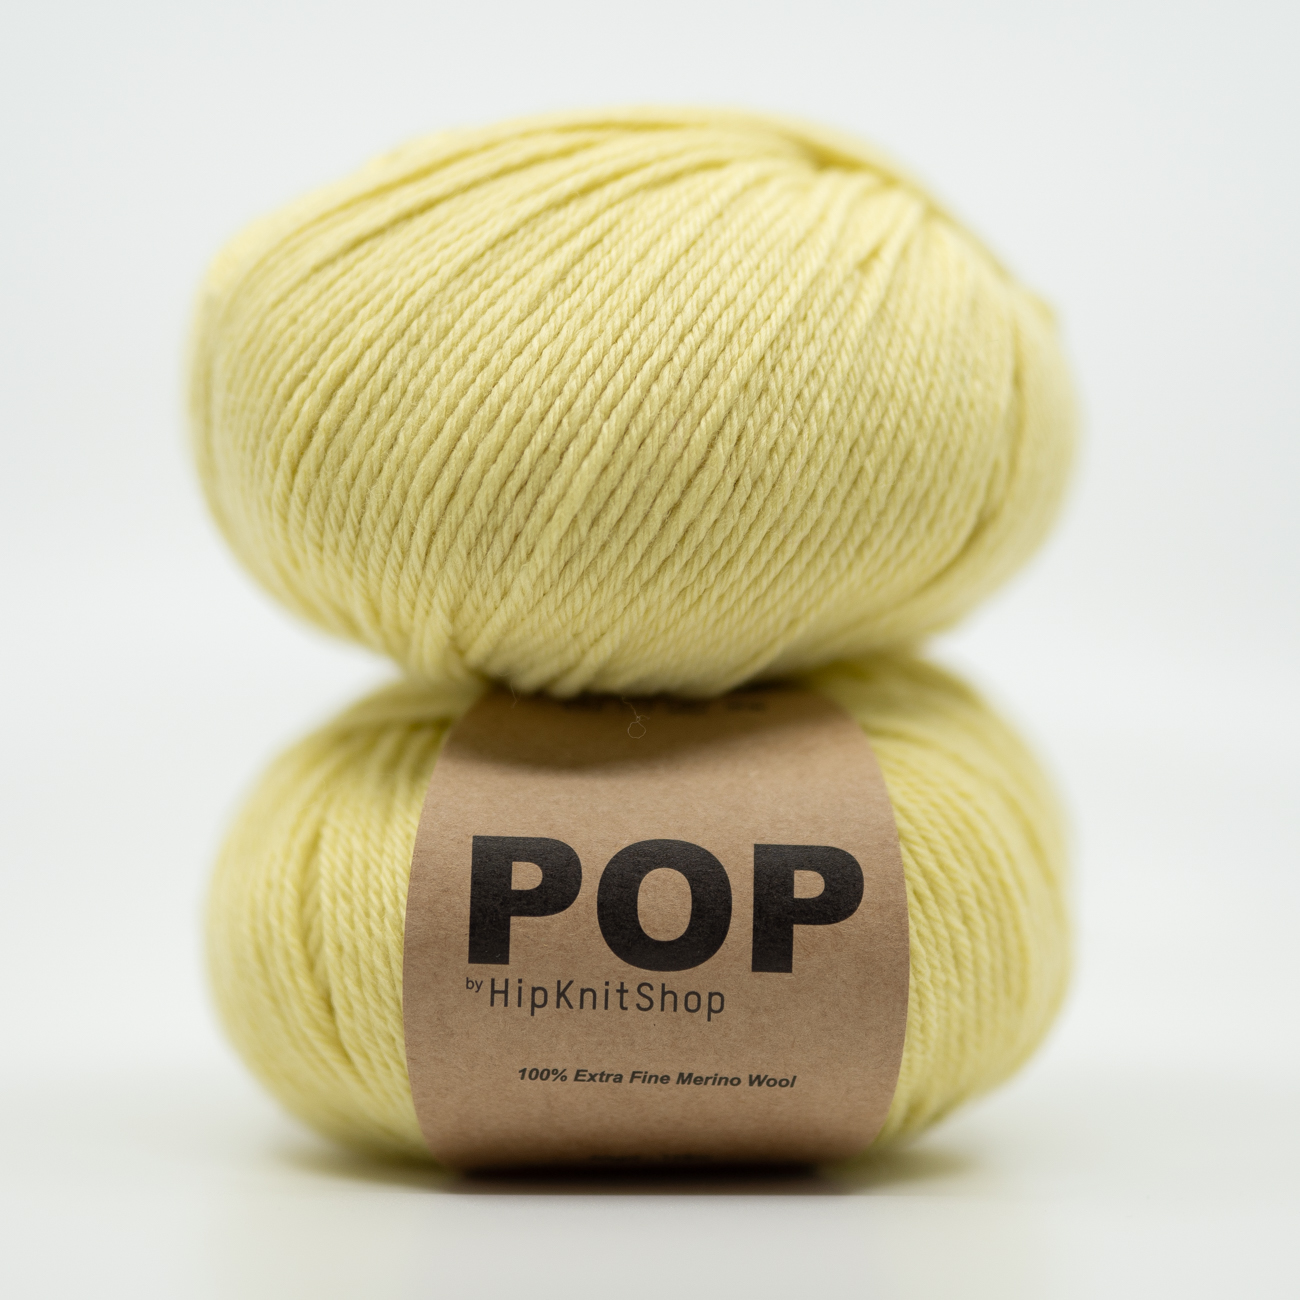  - Cheesecake | Pop merino | Merino wool yarn - by HipKnitShop - 26/09/2020